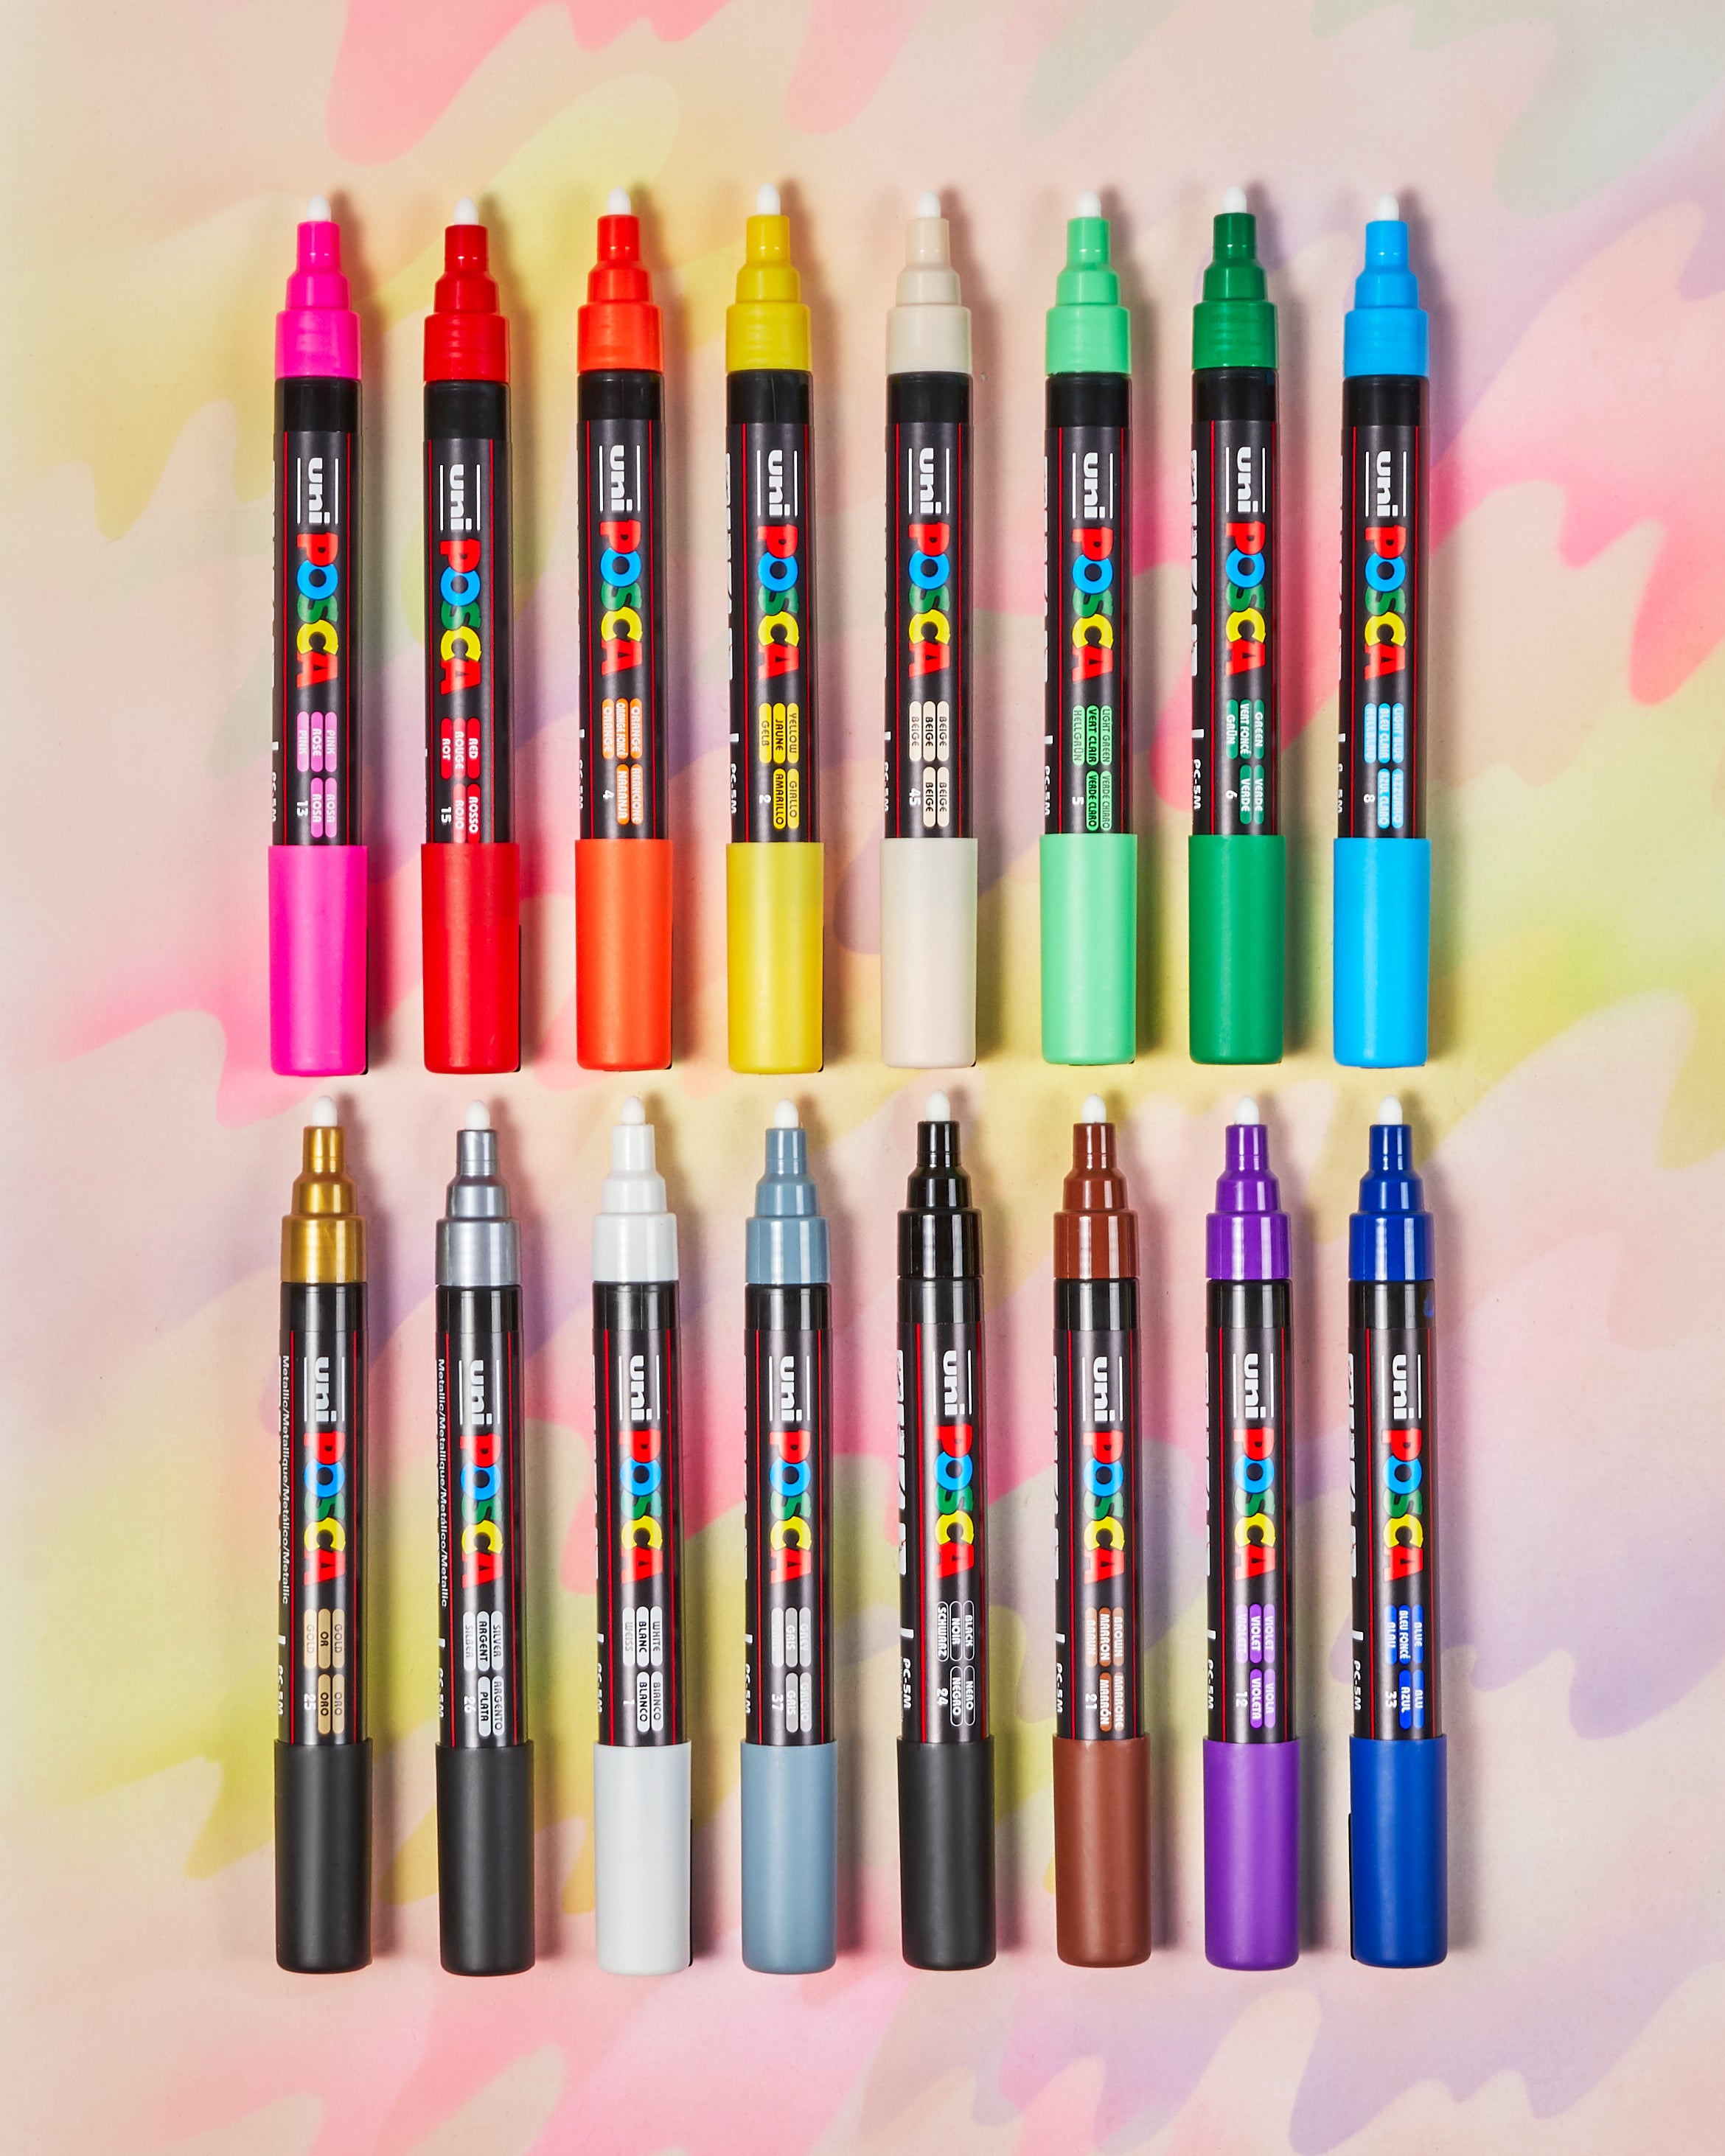  16 Posca Markers 3M, Posca Pens for Art Supplies